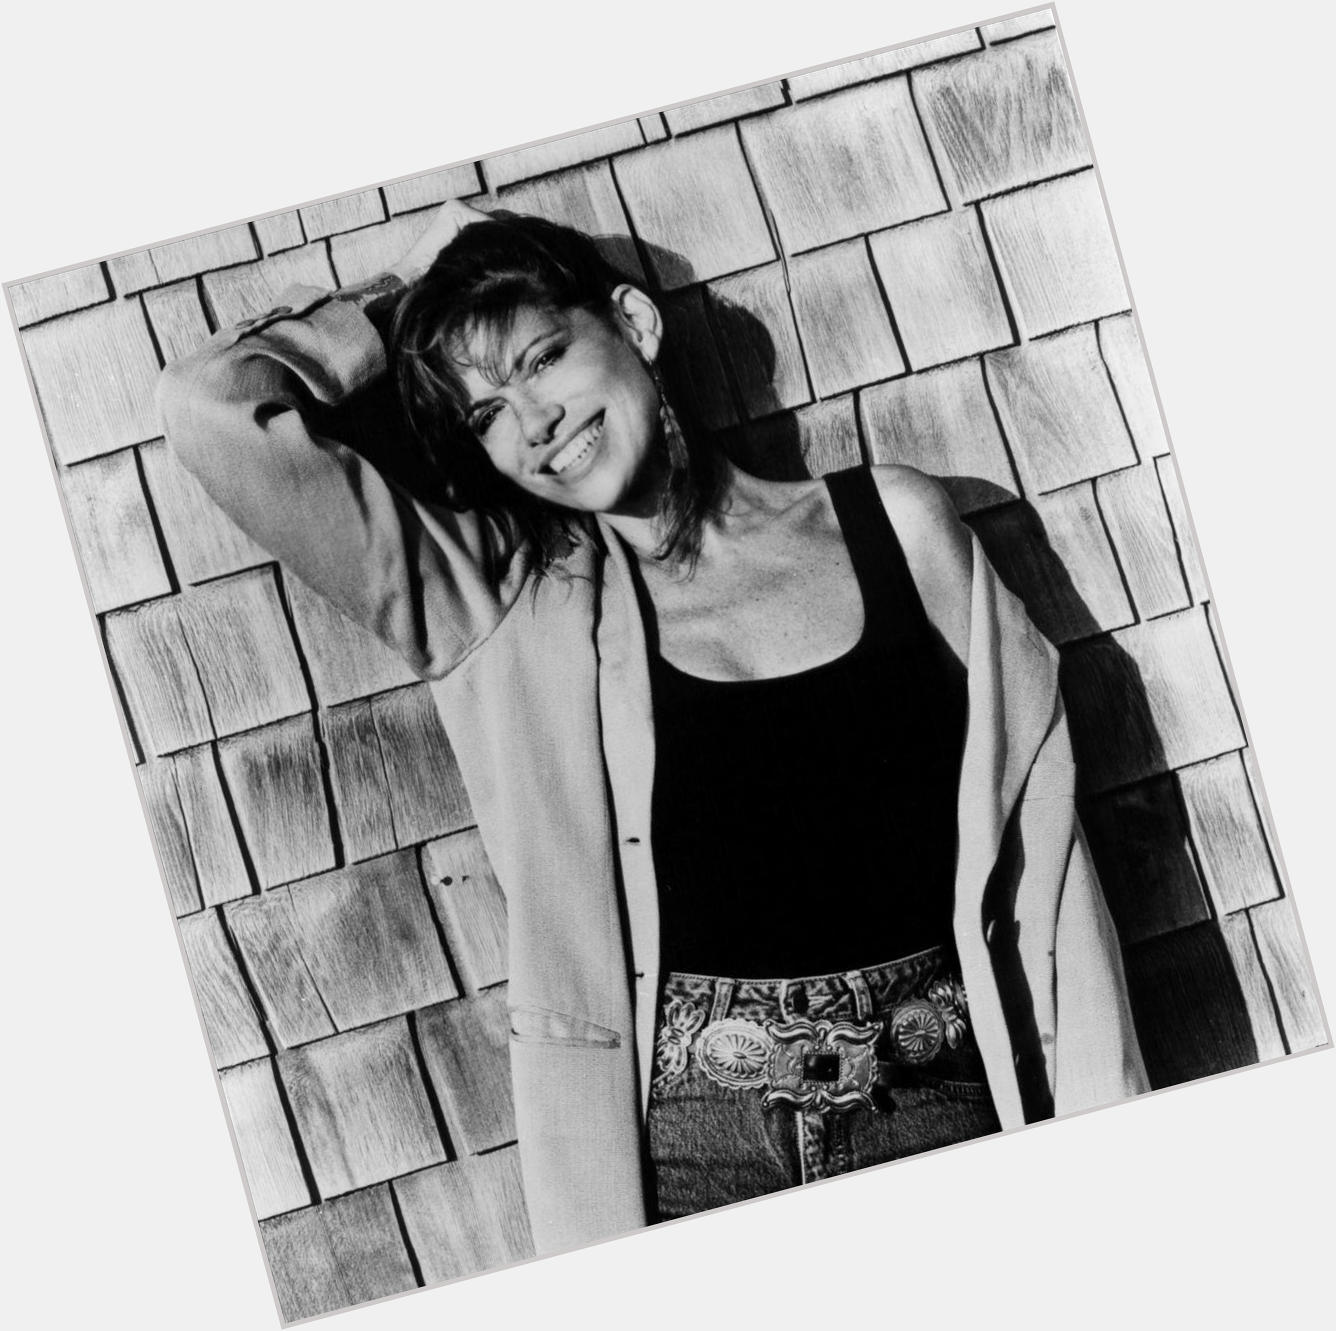 Happy birthday to pop/rock sensation, Carly Simon, born on this date, June 25, 1945. 